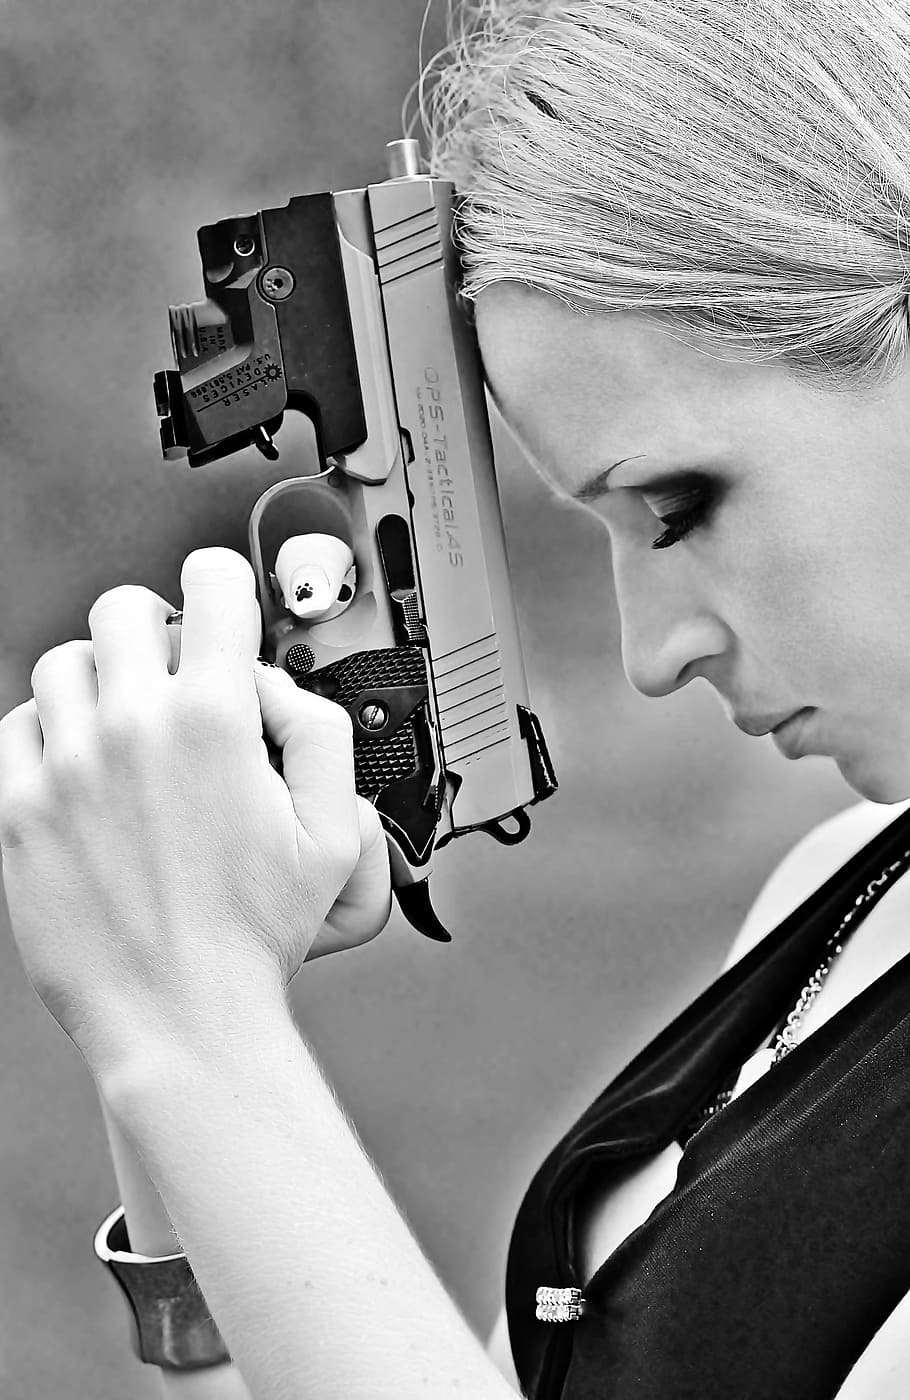 wanita memegang pistol, senjata, pistol, wanita, berdoa, kemarahan, hitam putih, memegang, headshot, potret